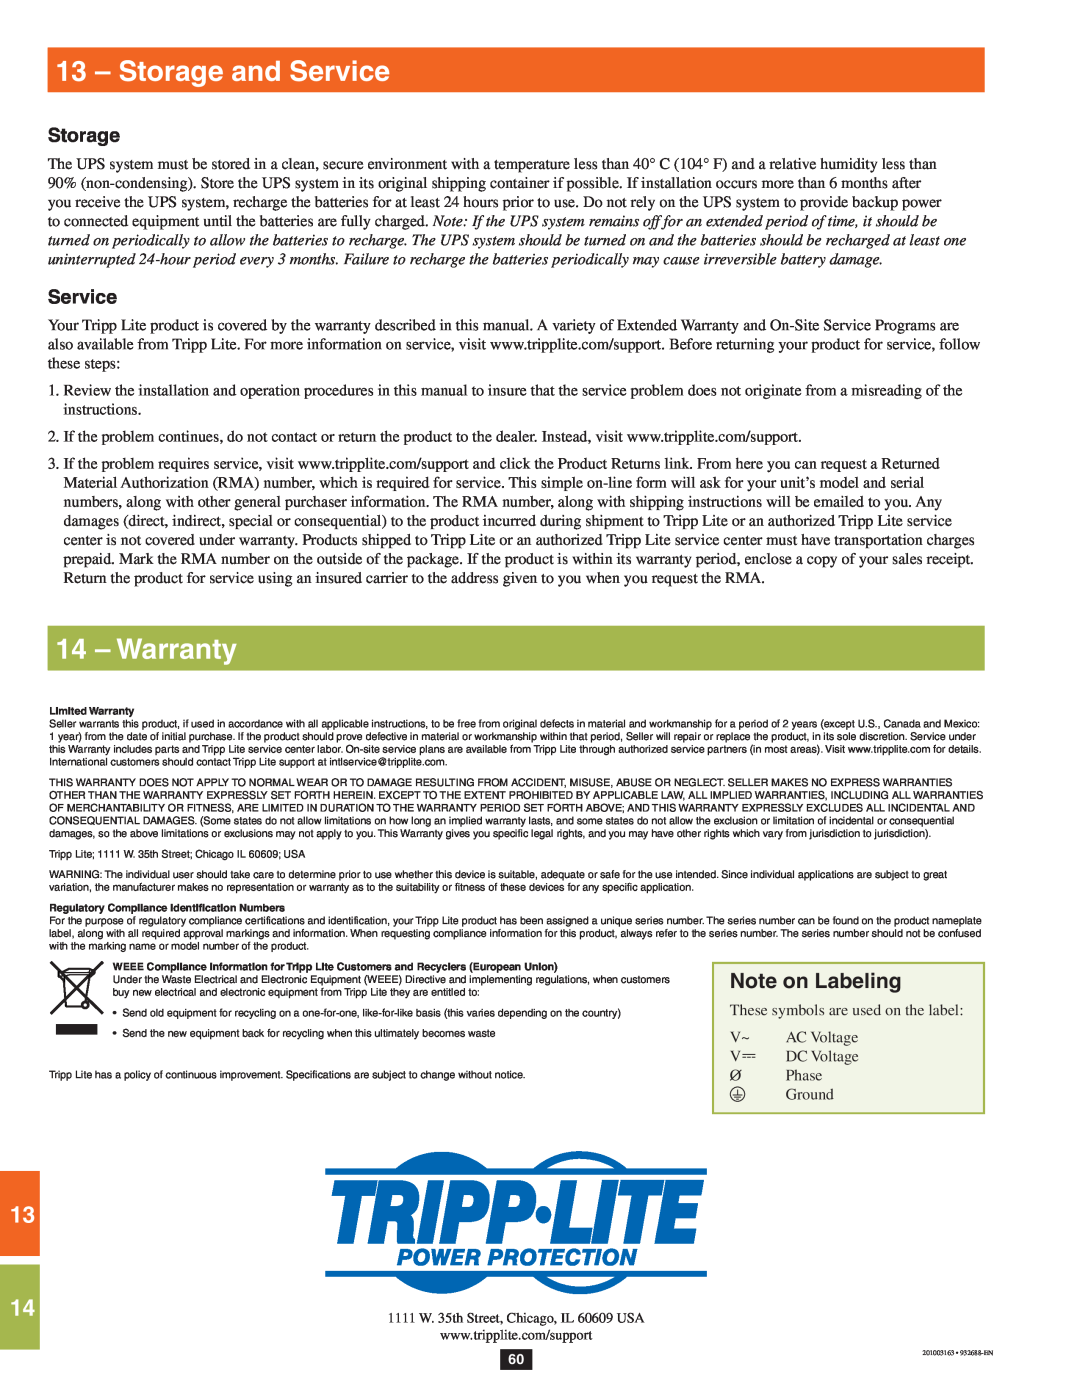 Tripp Lite SU80KX, SU20KX, SU40KX owner manual 1 13 - Storage and Service, 7 14 - Warranty, Note on Labeling 